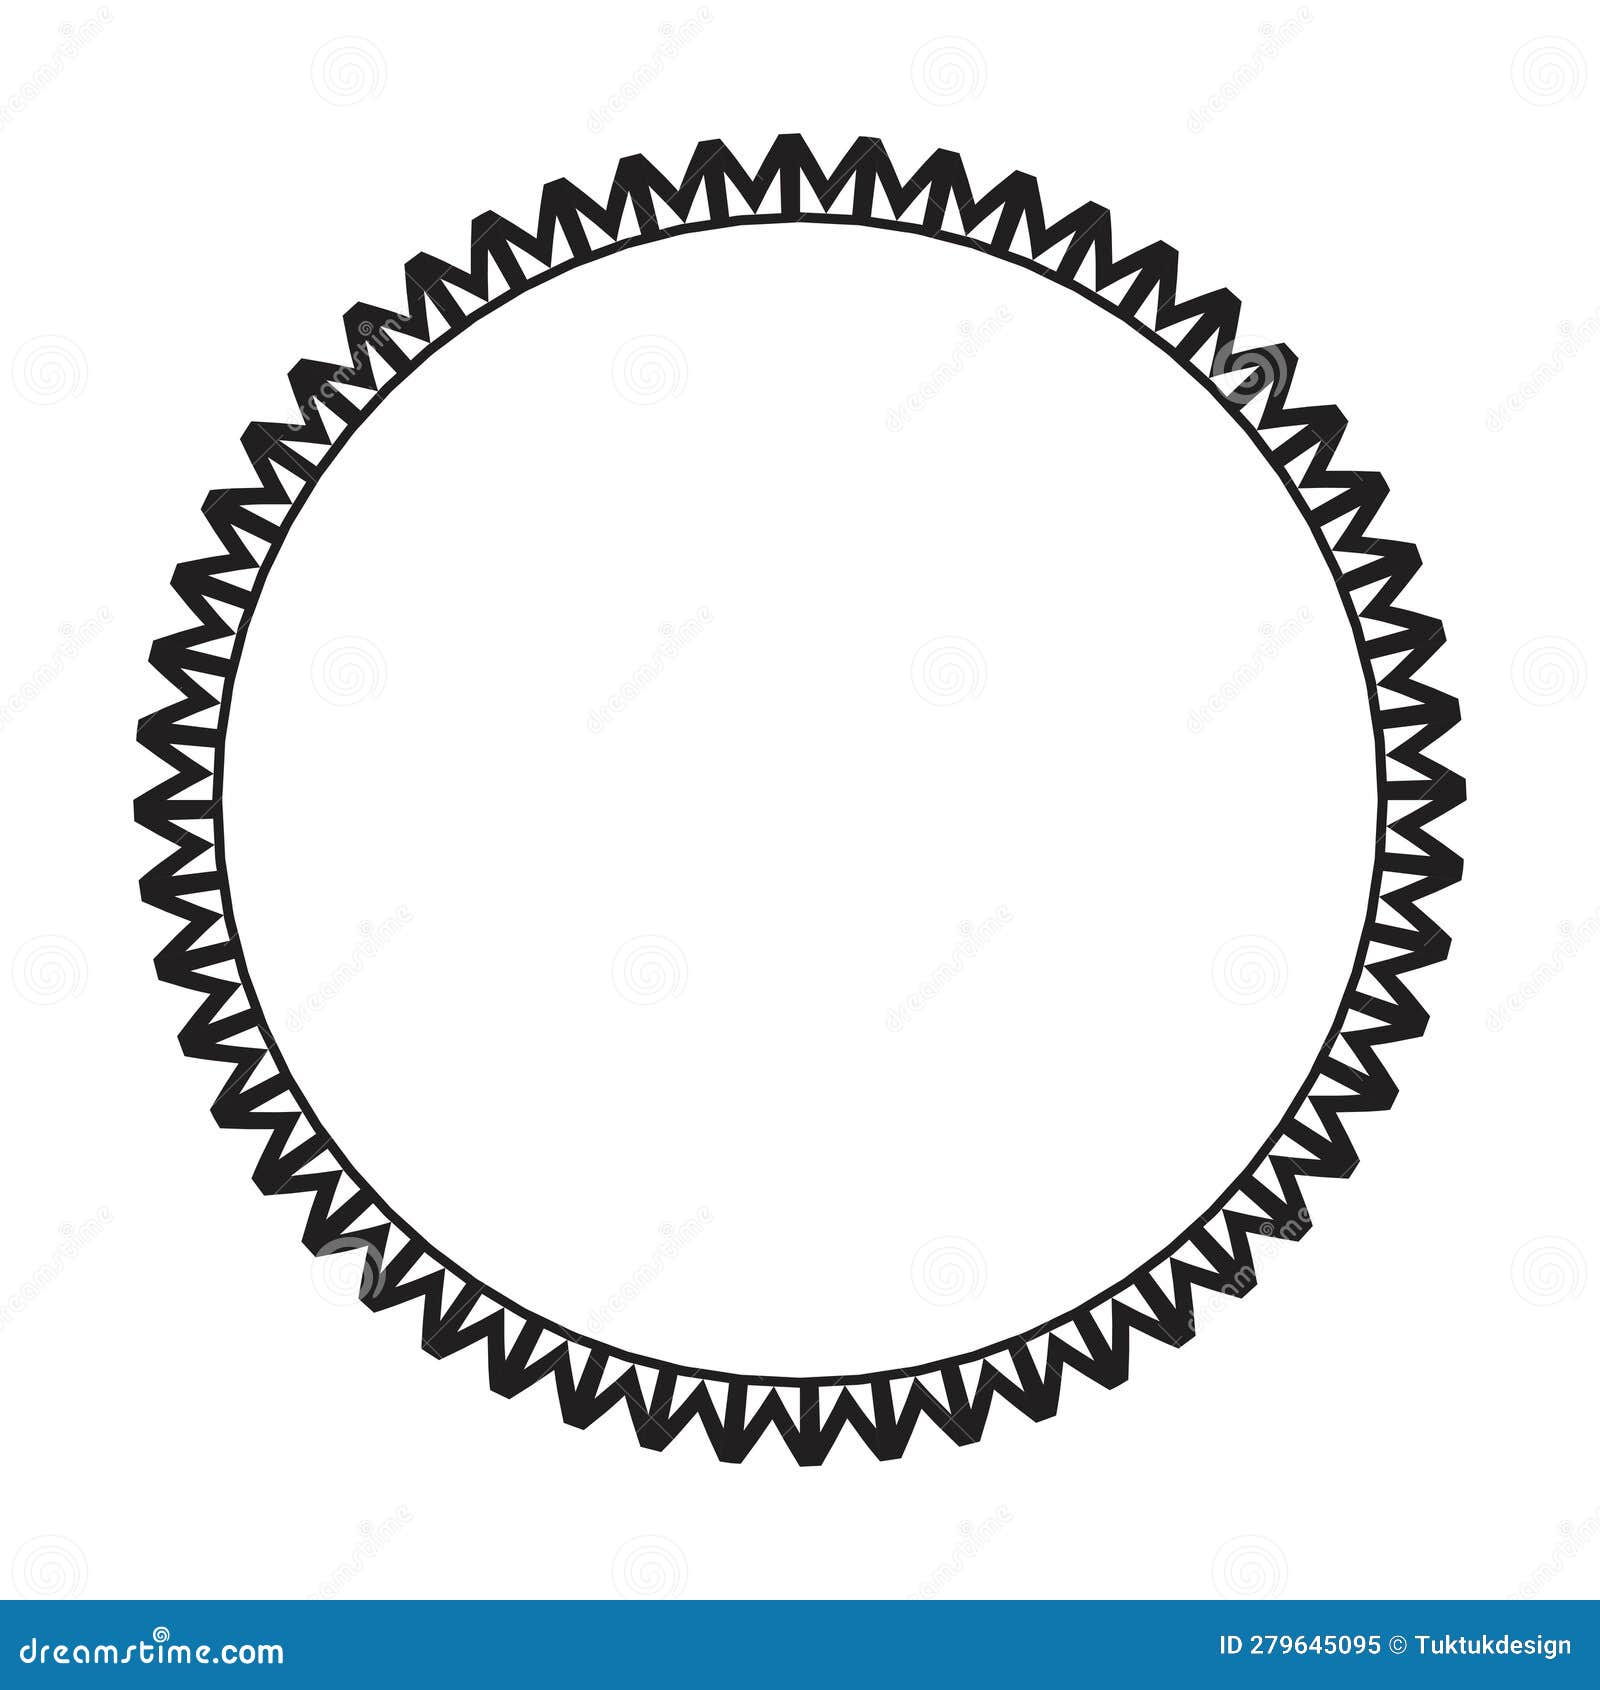 Circle frame round border design shape icon for - Stock